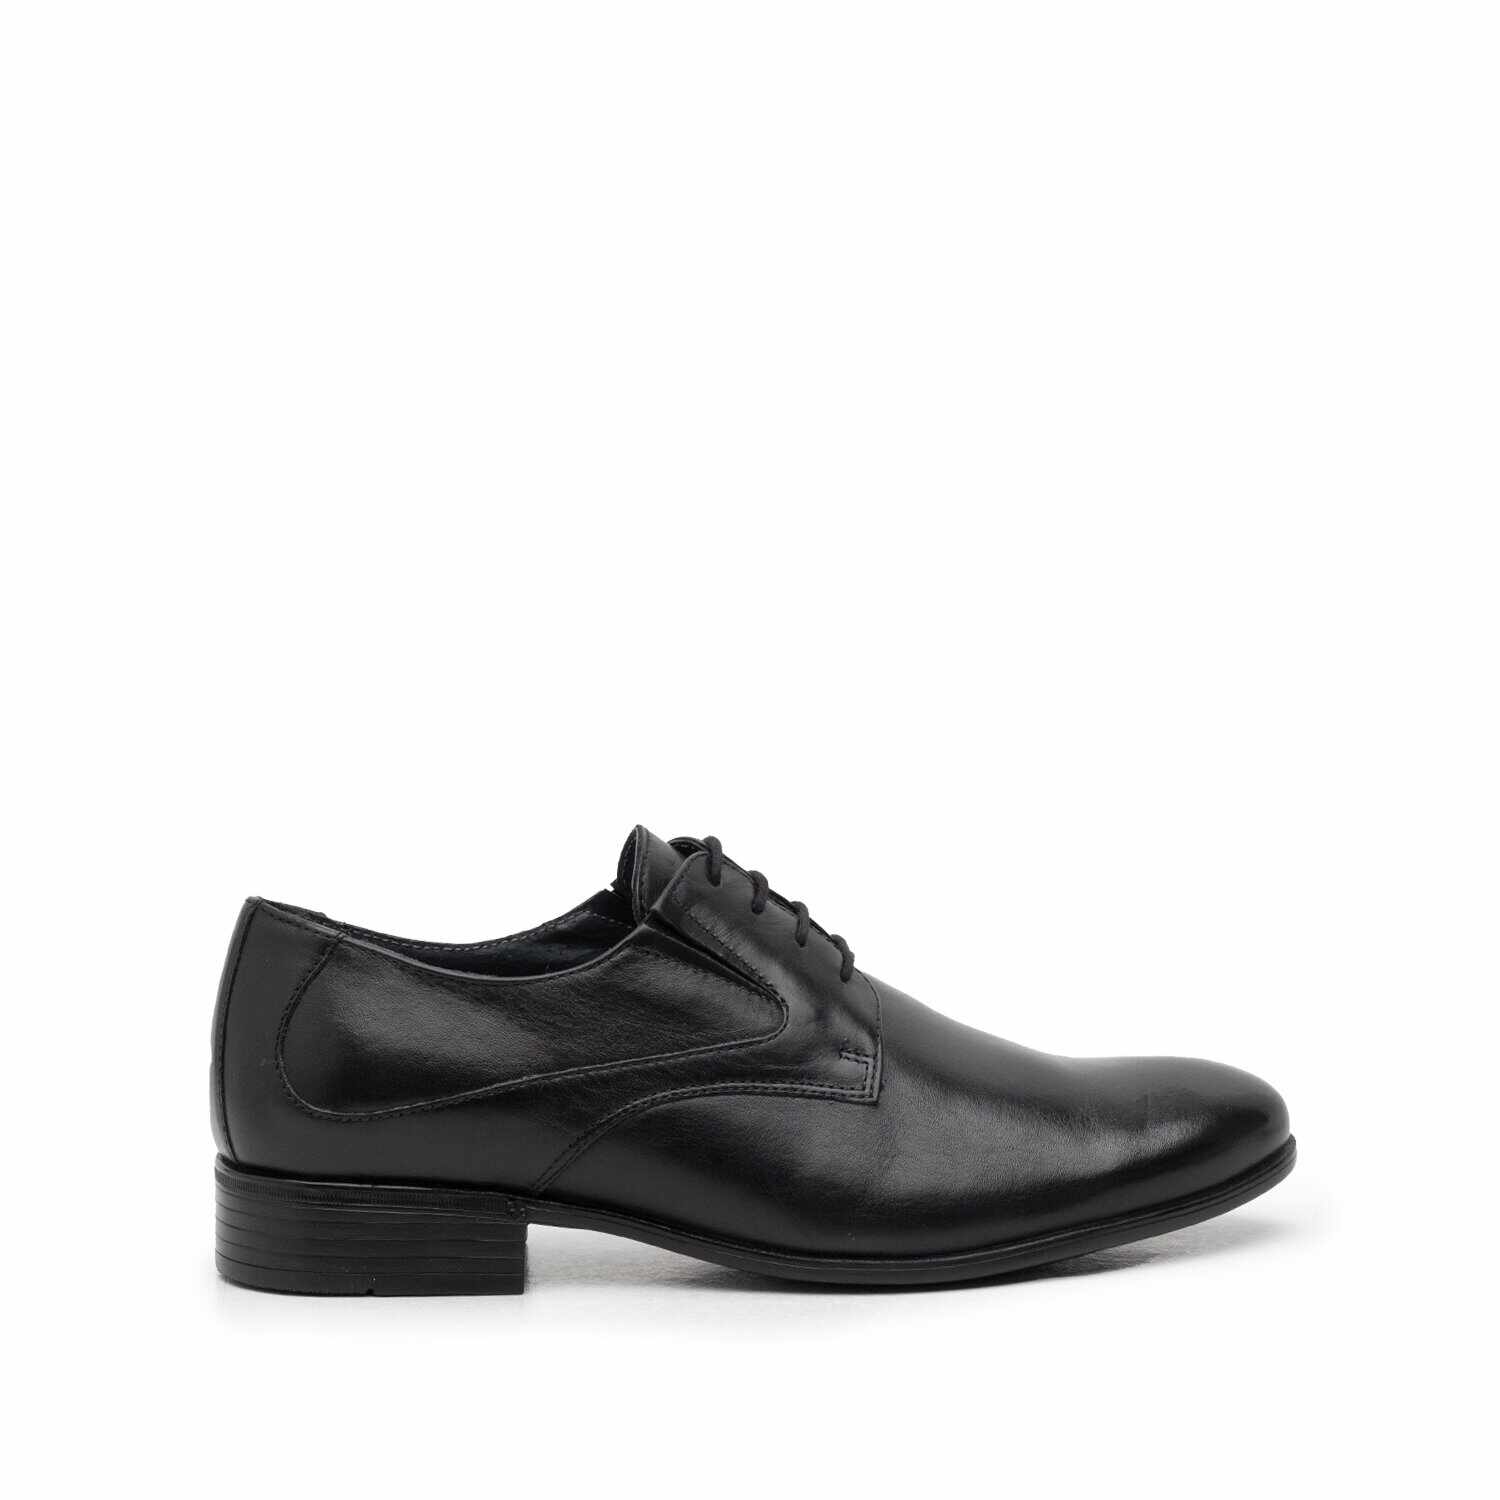 Pantofi eleganti barbati din piele naturala,Leofex - 690 negru box